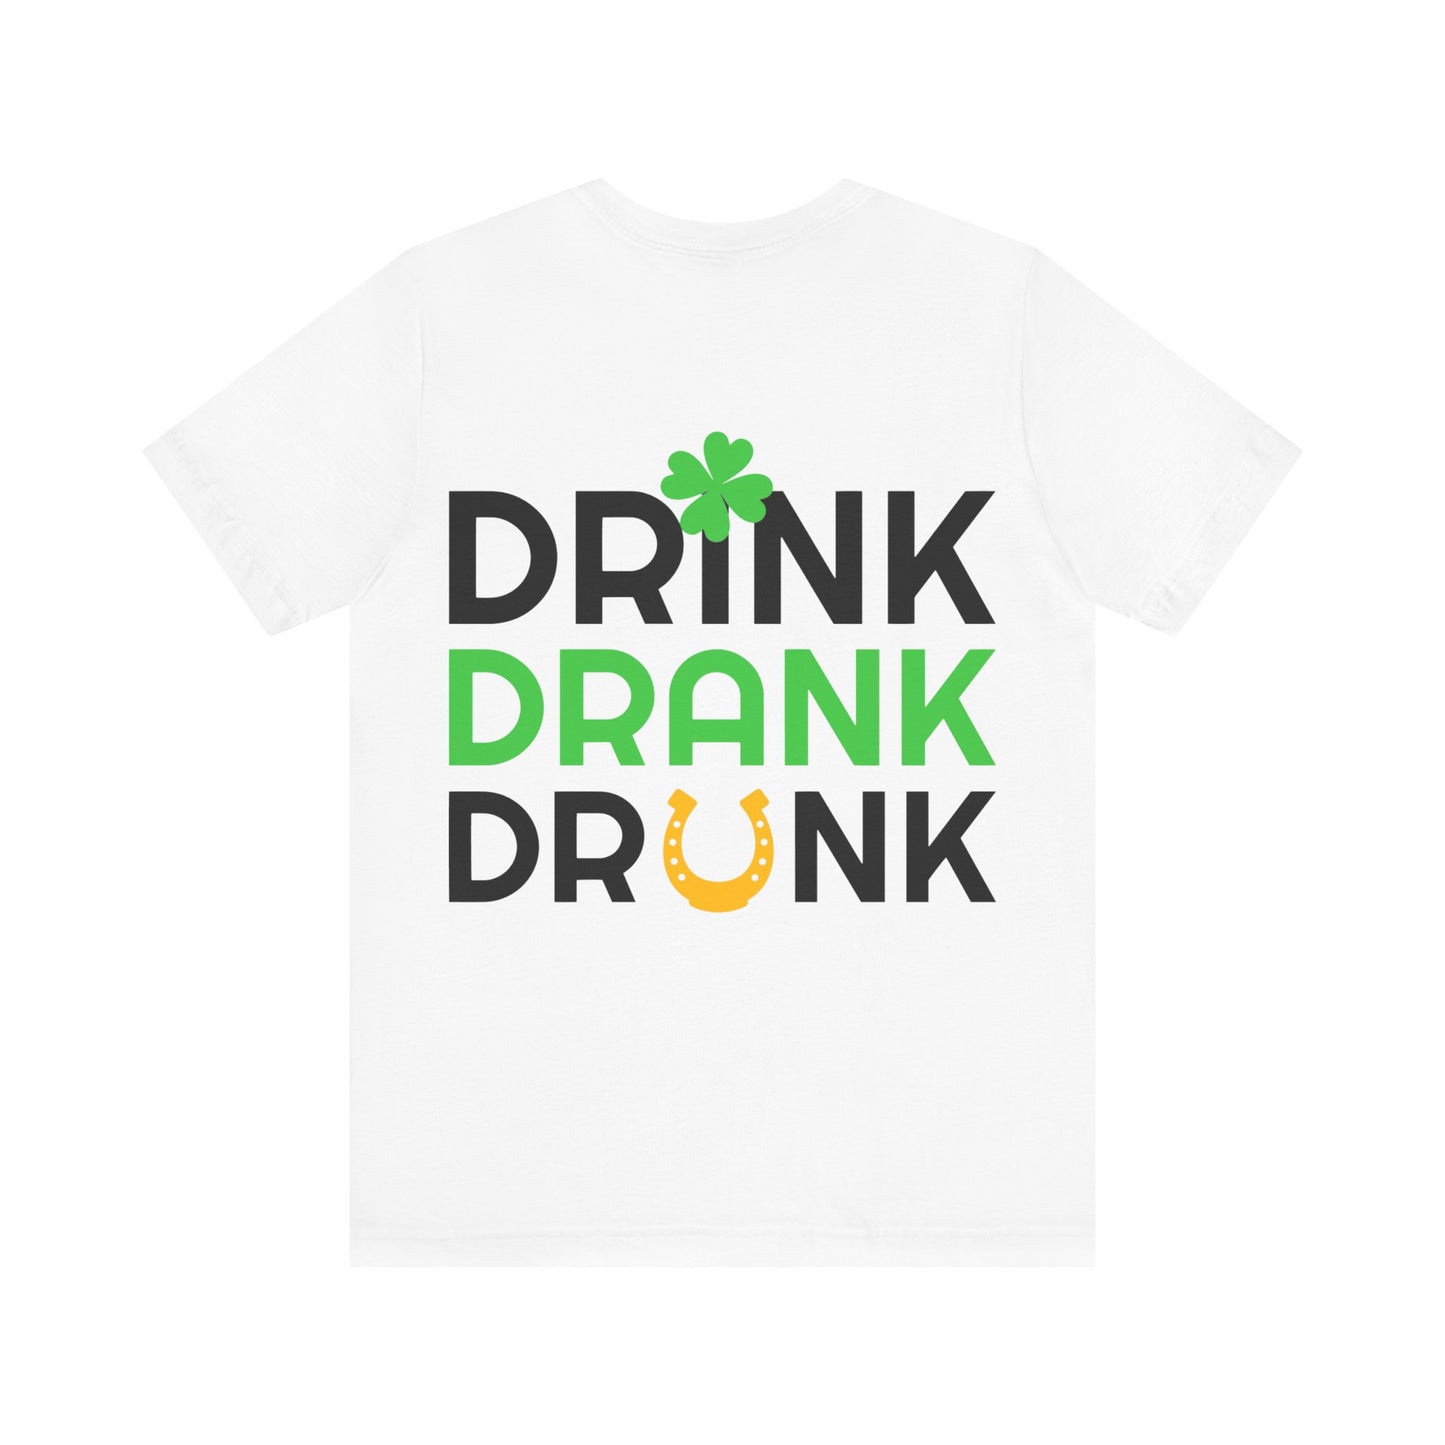 St. Patrick's Day - "Drunk-ish" -  Short Sleeve Tee